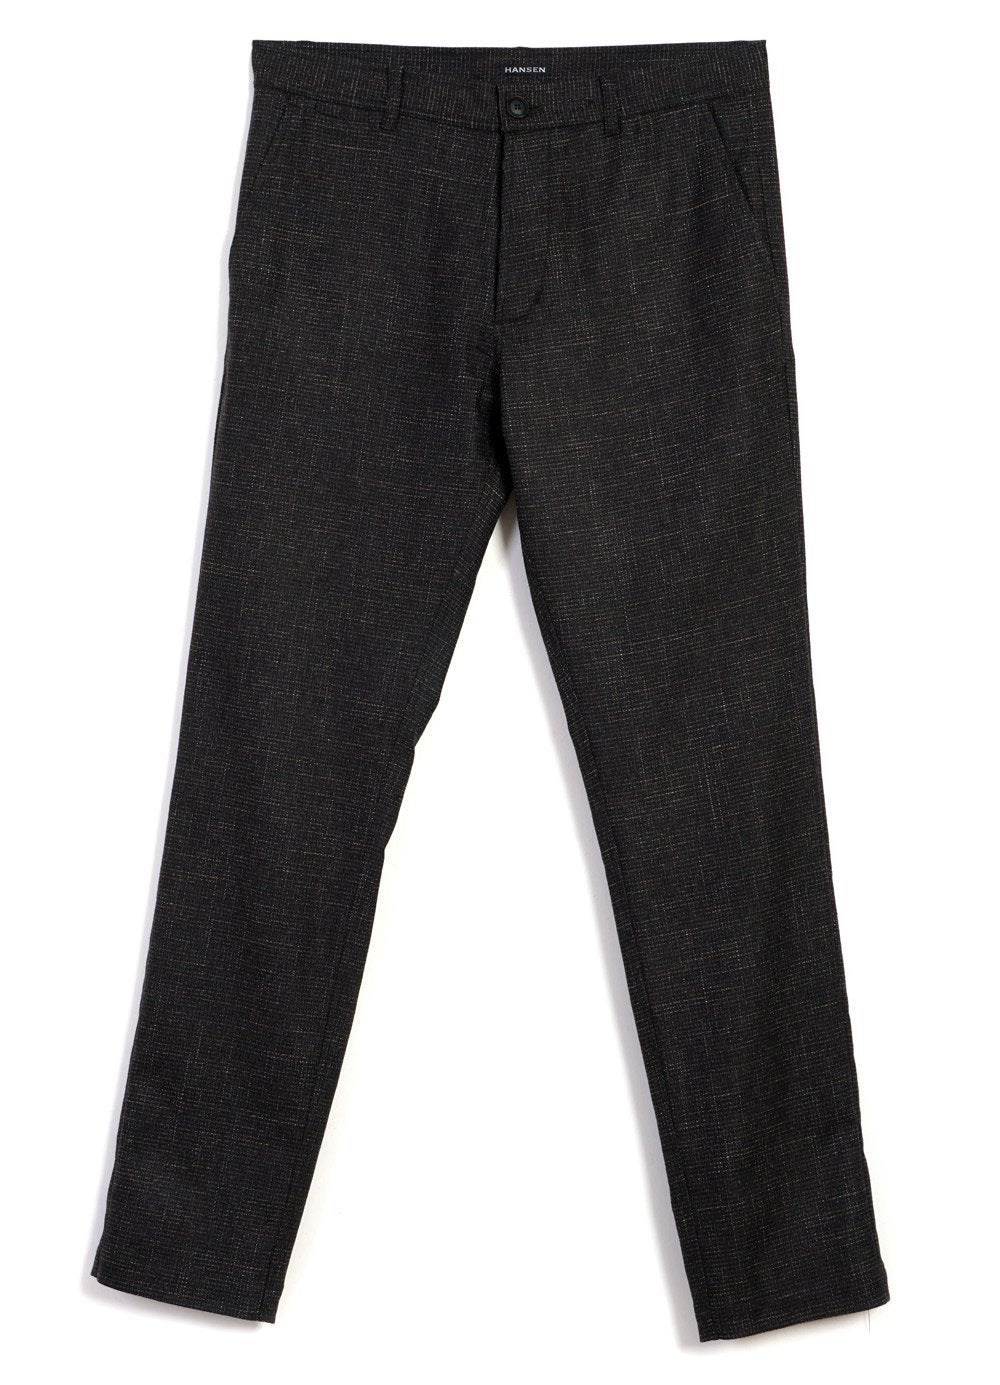 HANSEN Garments - FRED | Regular Fit Trousers | Macchiato - HANSEN Garments